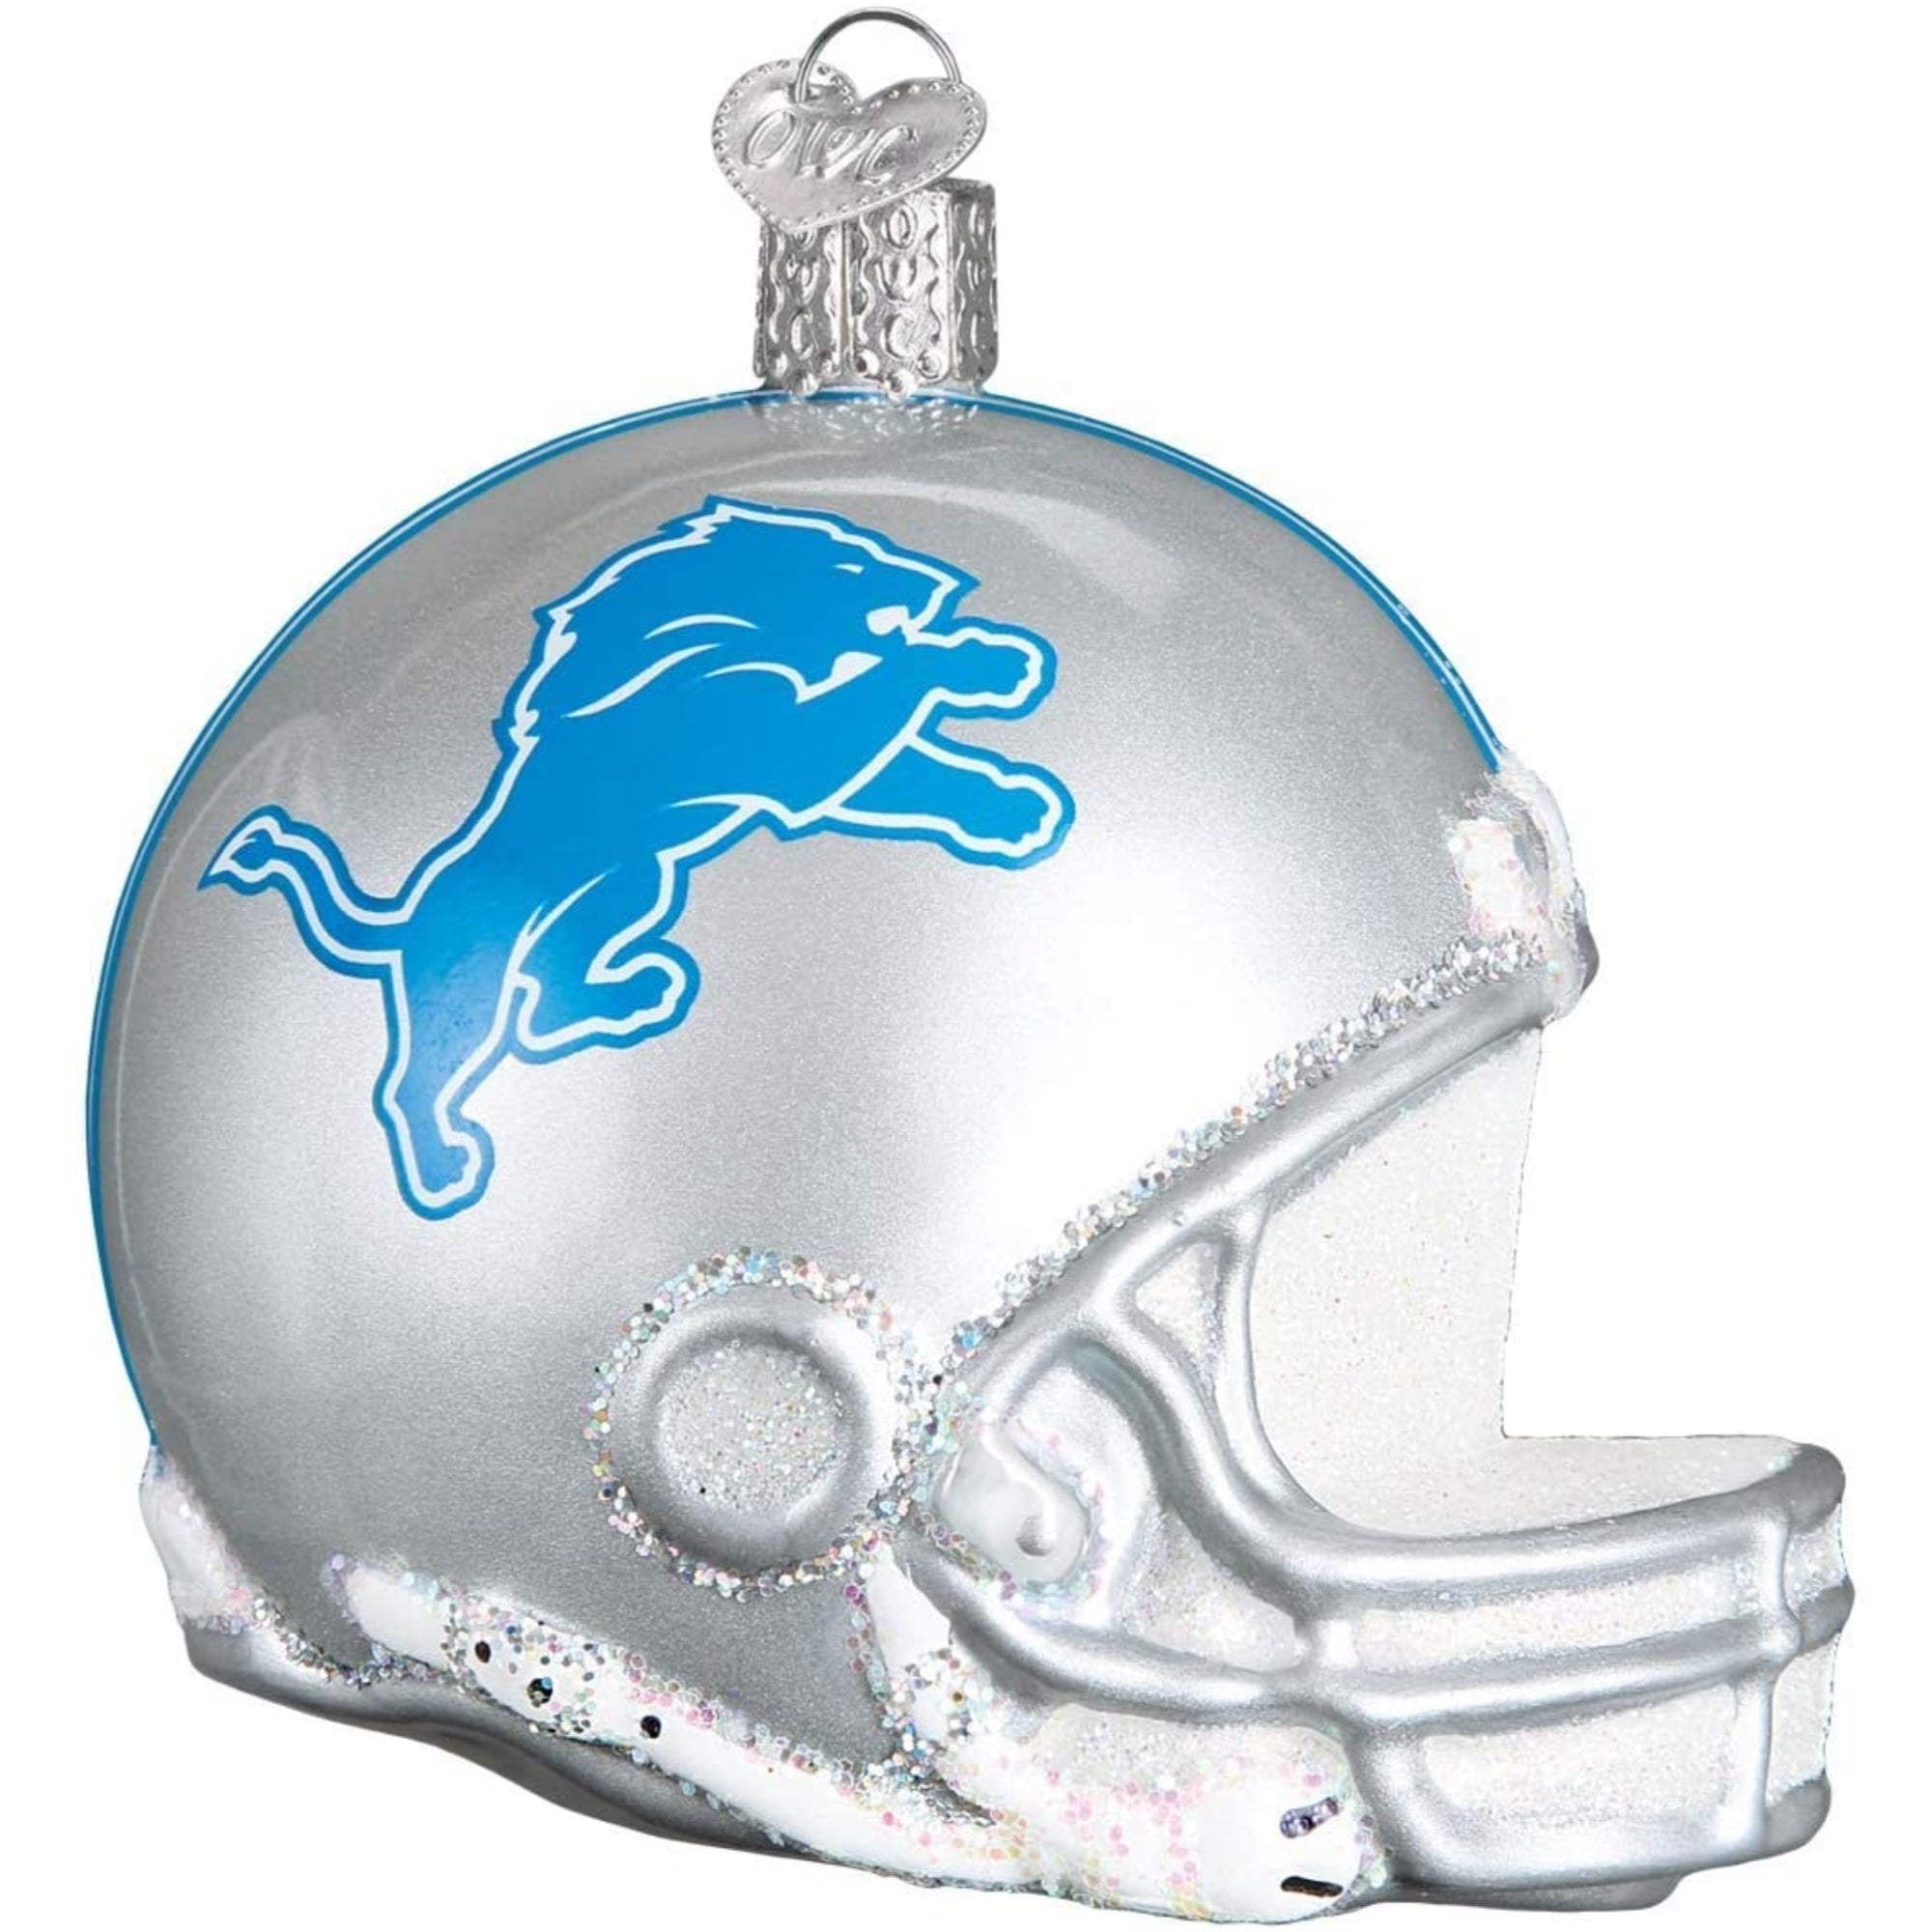 Old World Christmas Detroit Lions Helmet Ornament For Christmas Tree